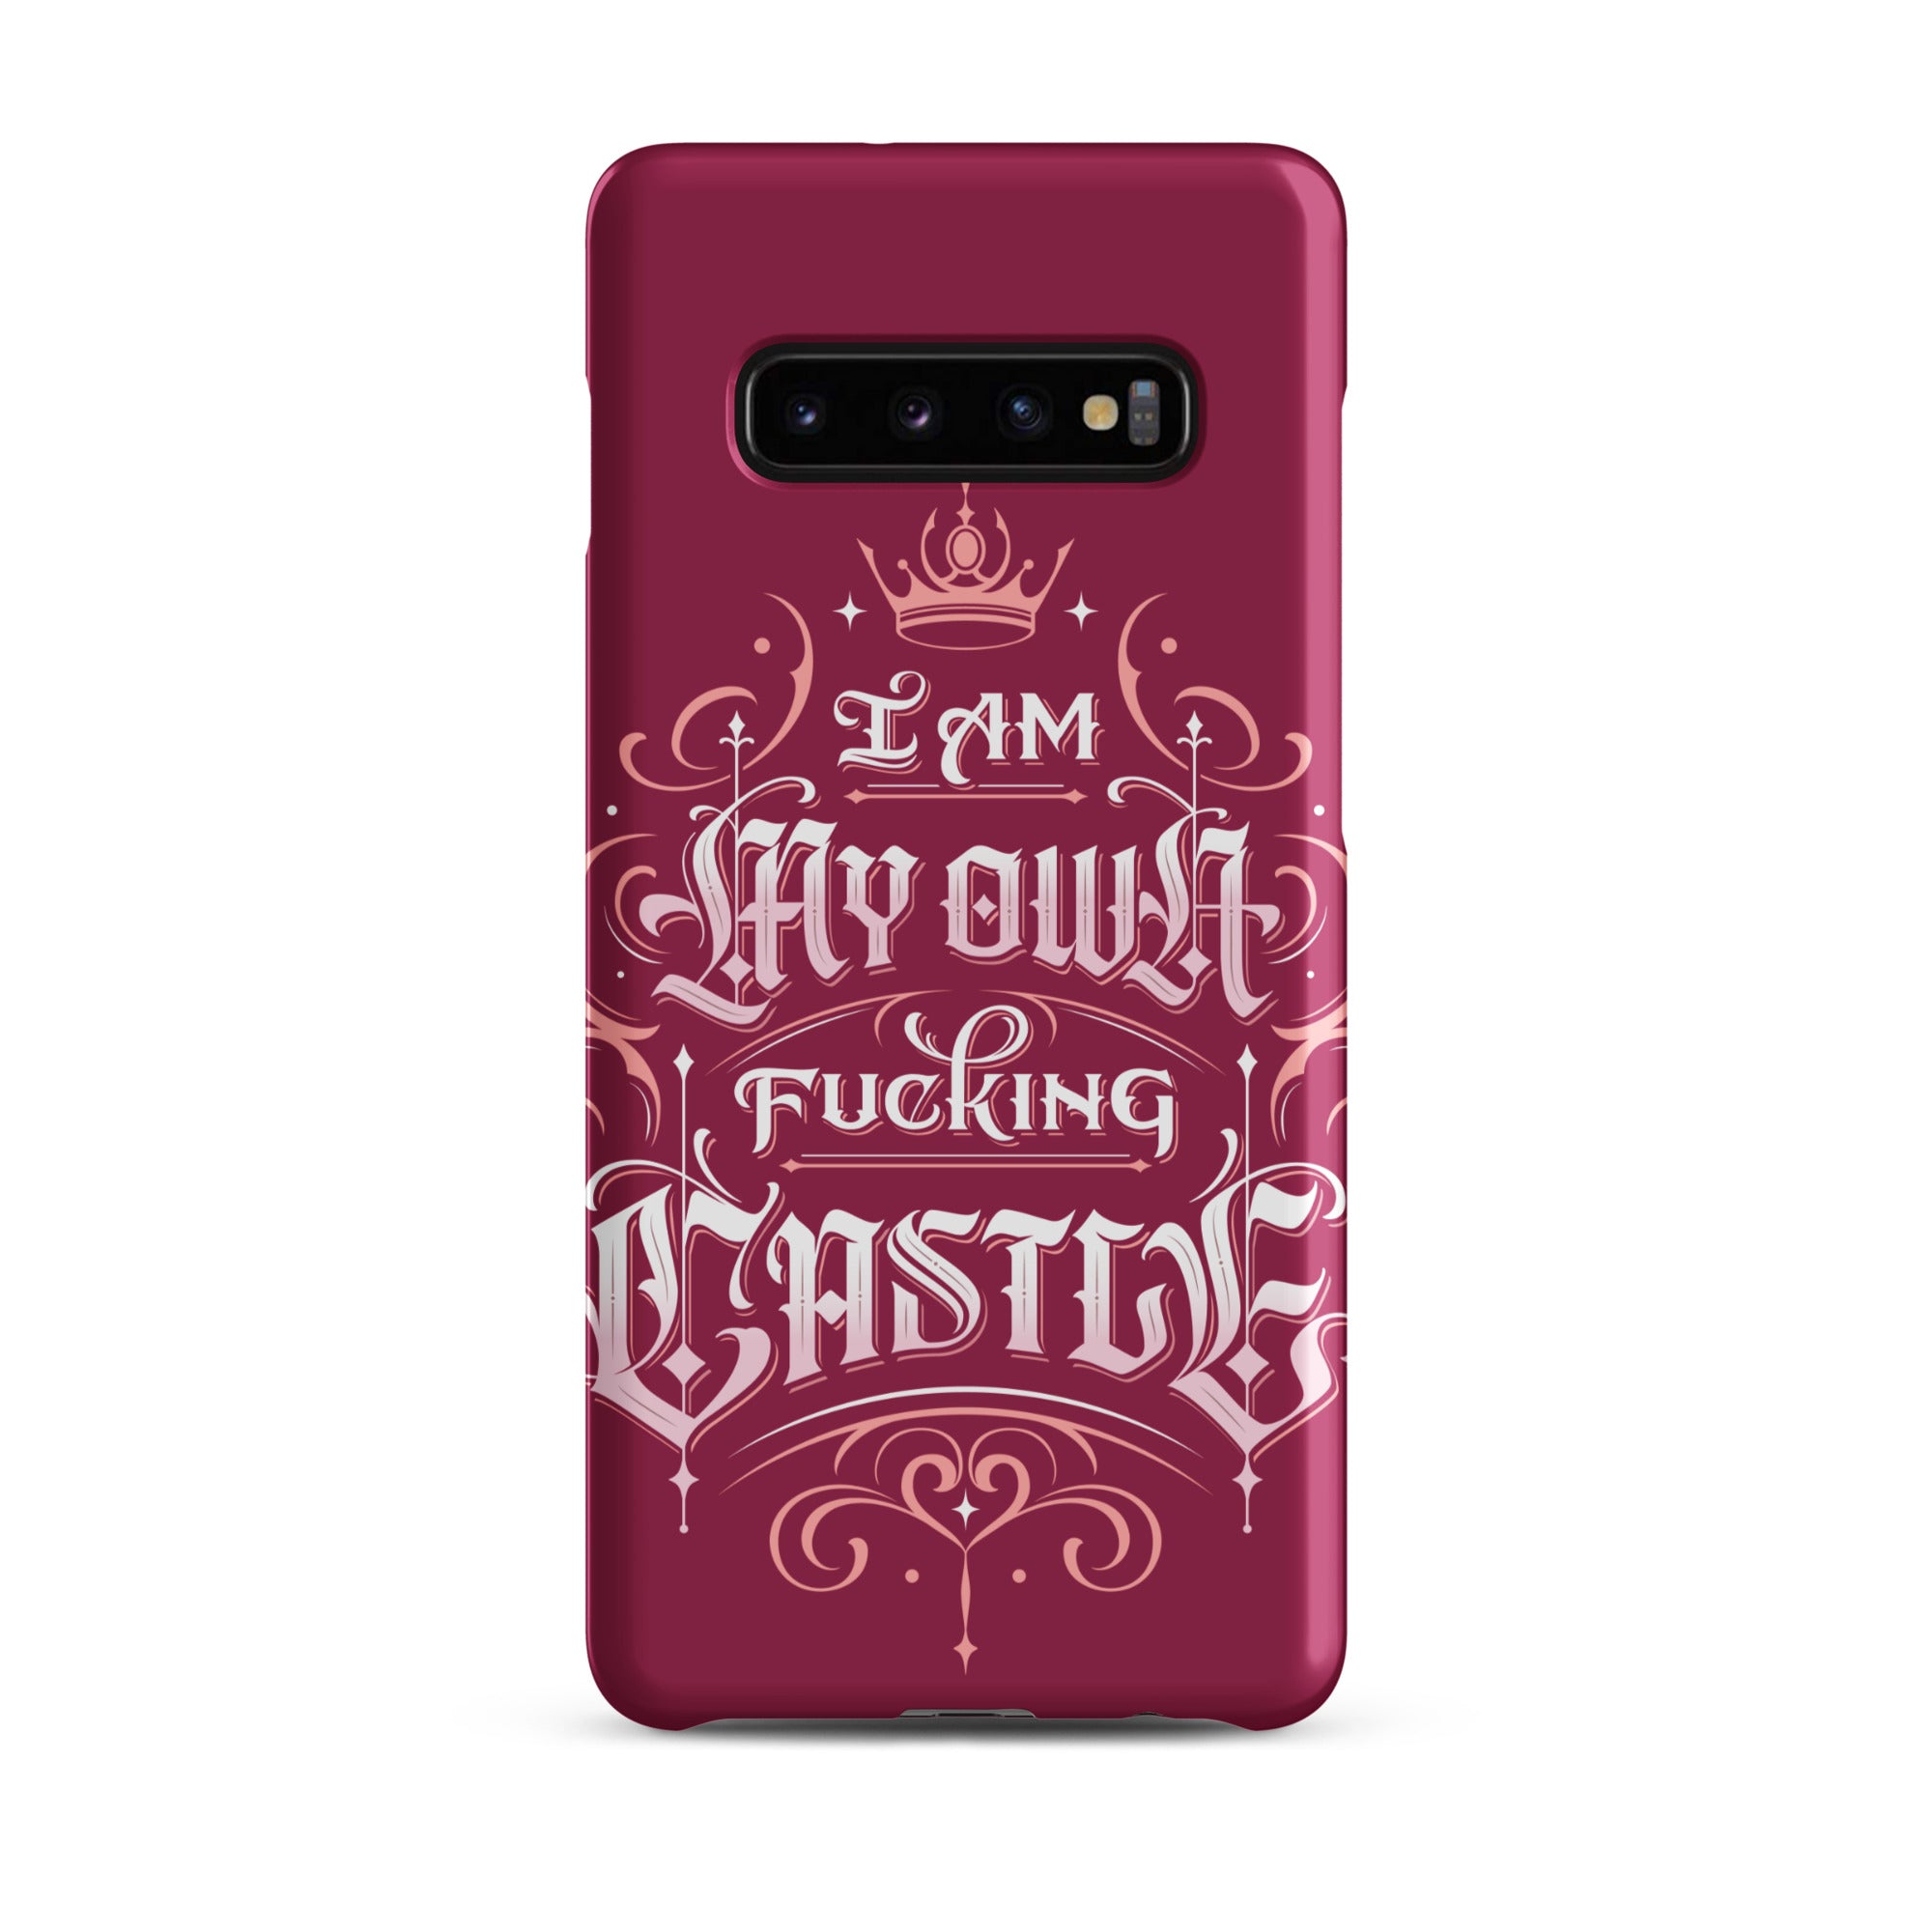 "I am my own fucking castle" Samsung Phone Case